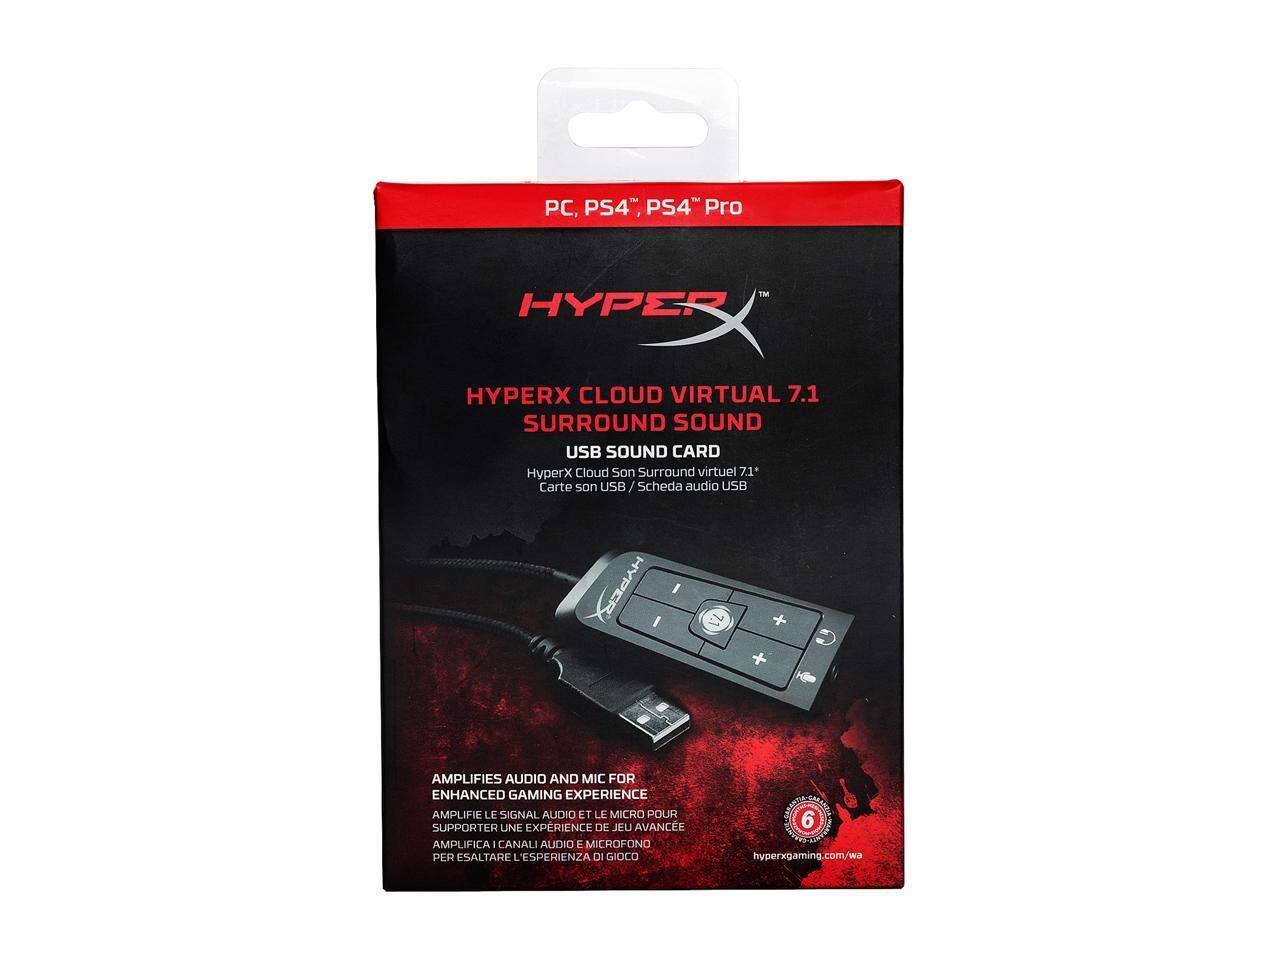 HyperX Cloud 2 USB 7.1 بطاقة الصوت المحيطي الظاهري Cloud II 7.1 بطاقة الصوت المحيطي - Cloud II بدون صندوق سماعة الألعاب HyperX Cloud II، 7.1 سماعات الصوت المحيطي USB بطاقة الصوت الجديدة Kingston HyperX Cloud II DSP USB 